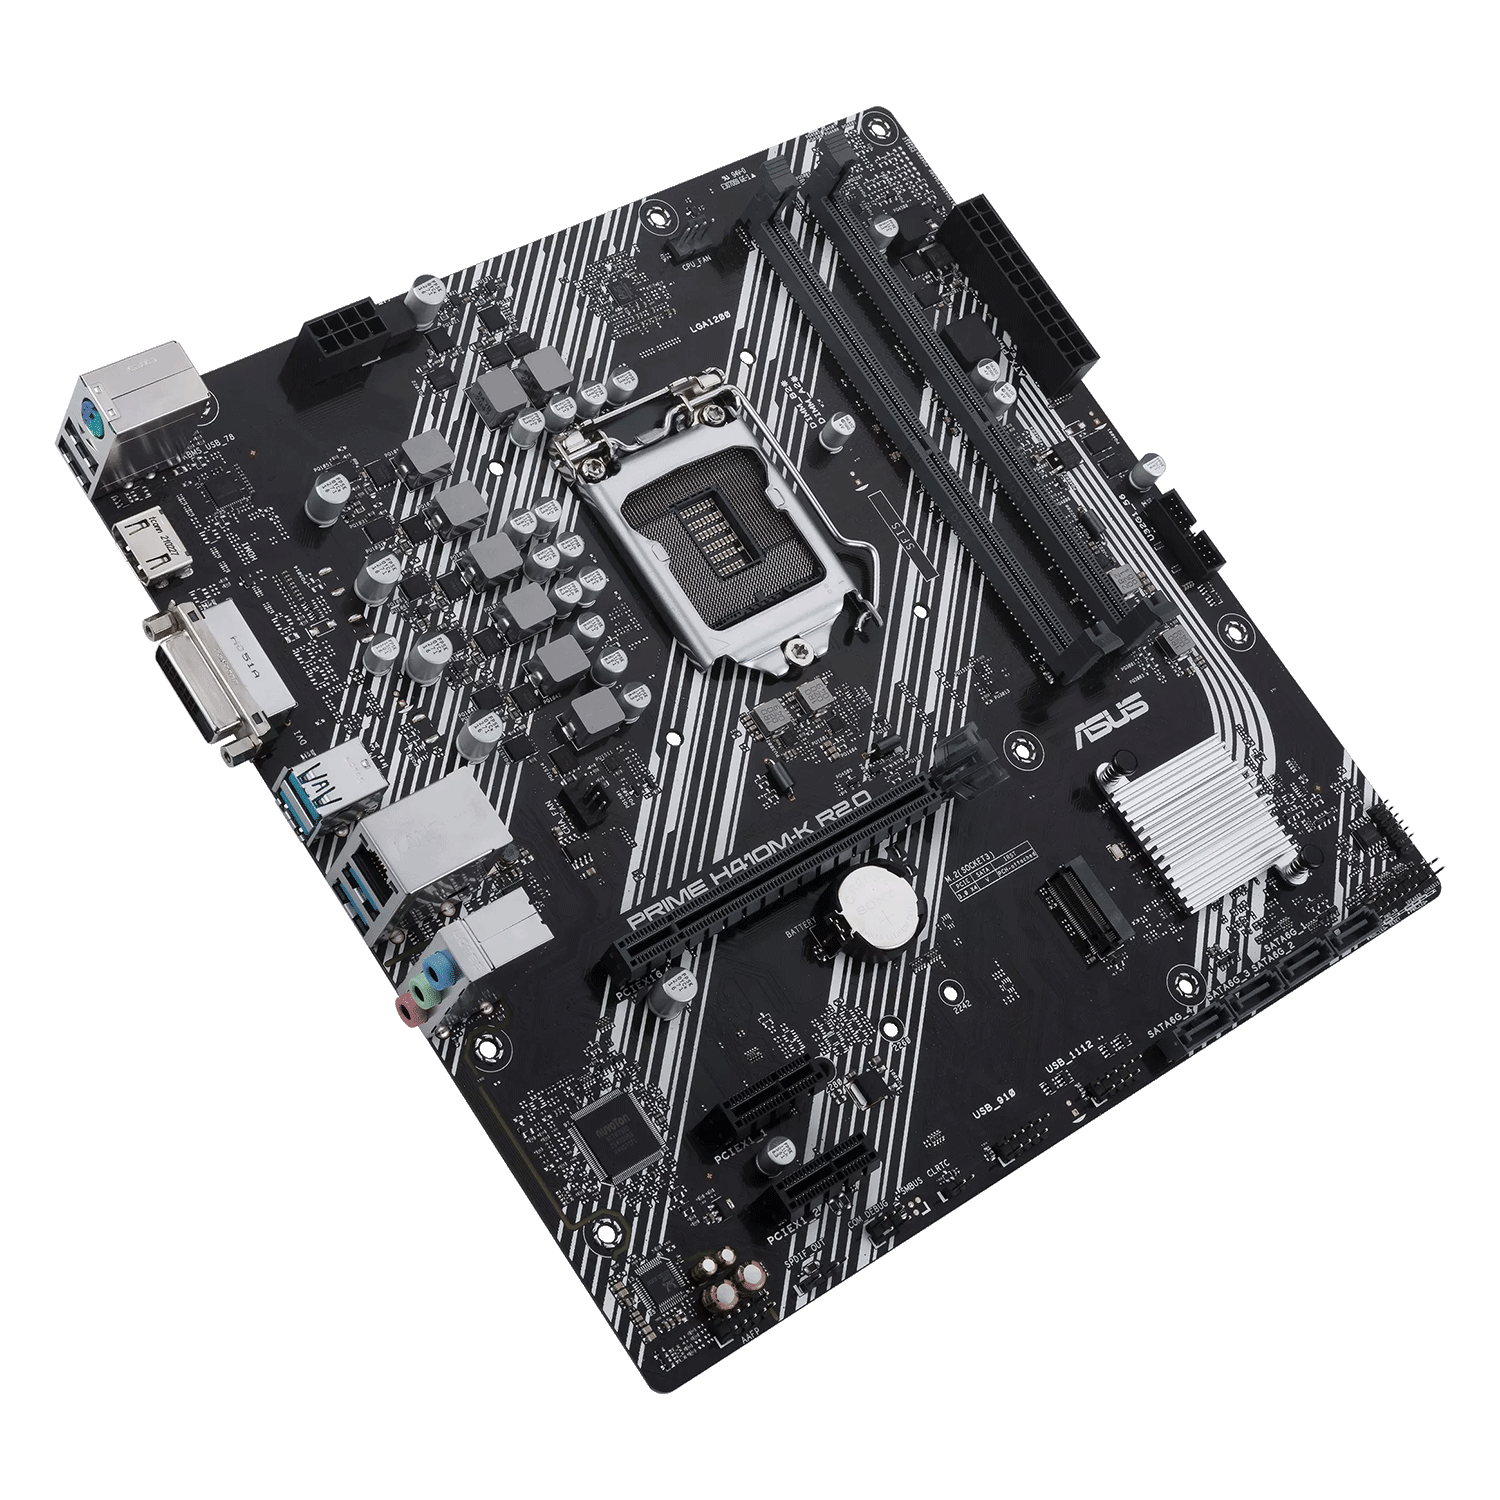 Placa Mãe Asus Prime H410M-K R2.0 / Socket LGA 1200 / Chipset H470 / DDR4 / Micro ATX
